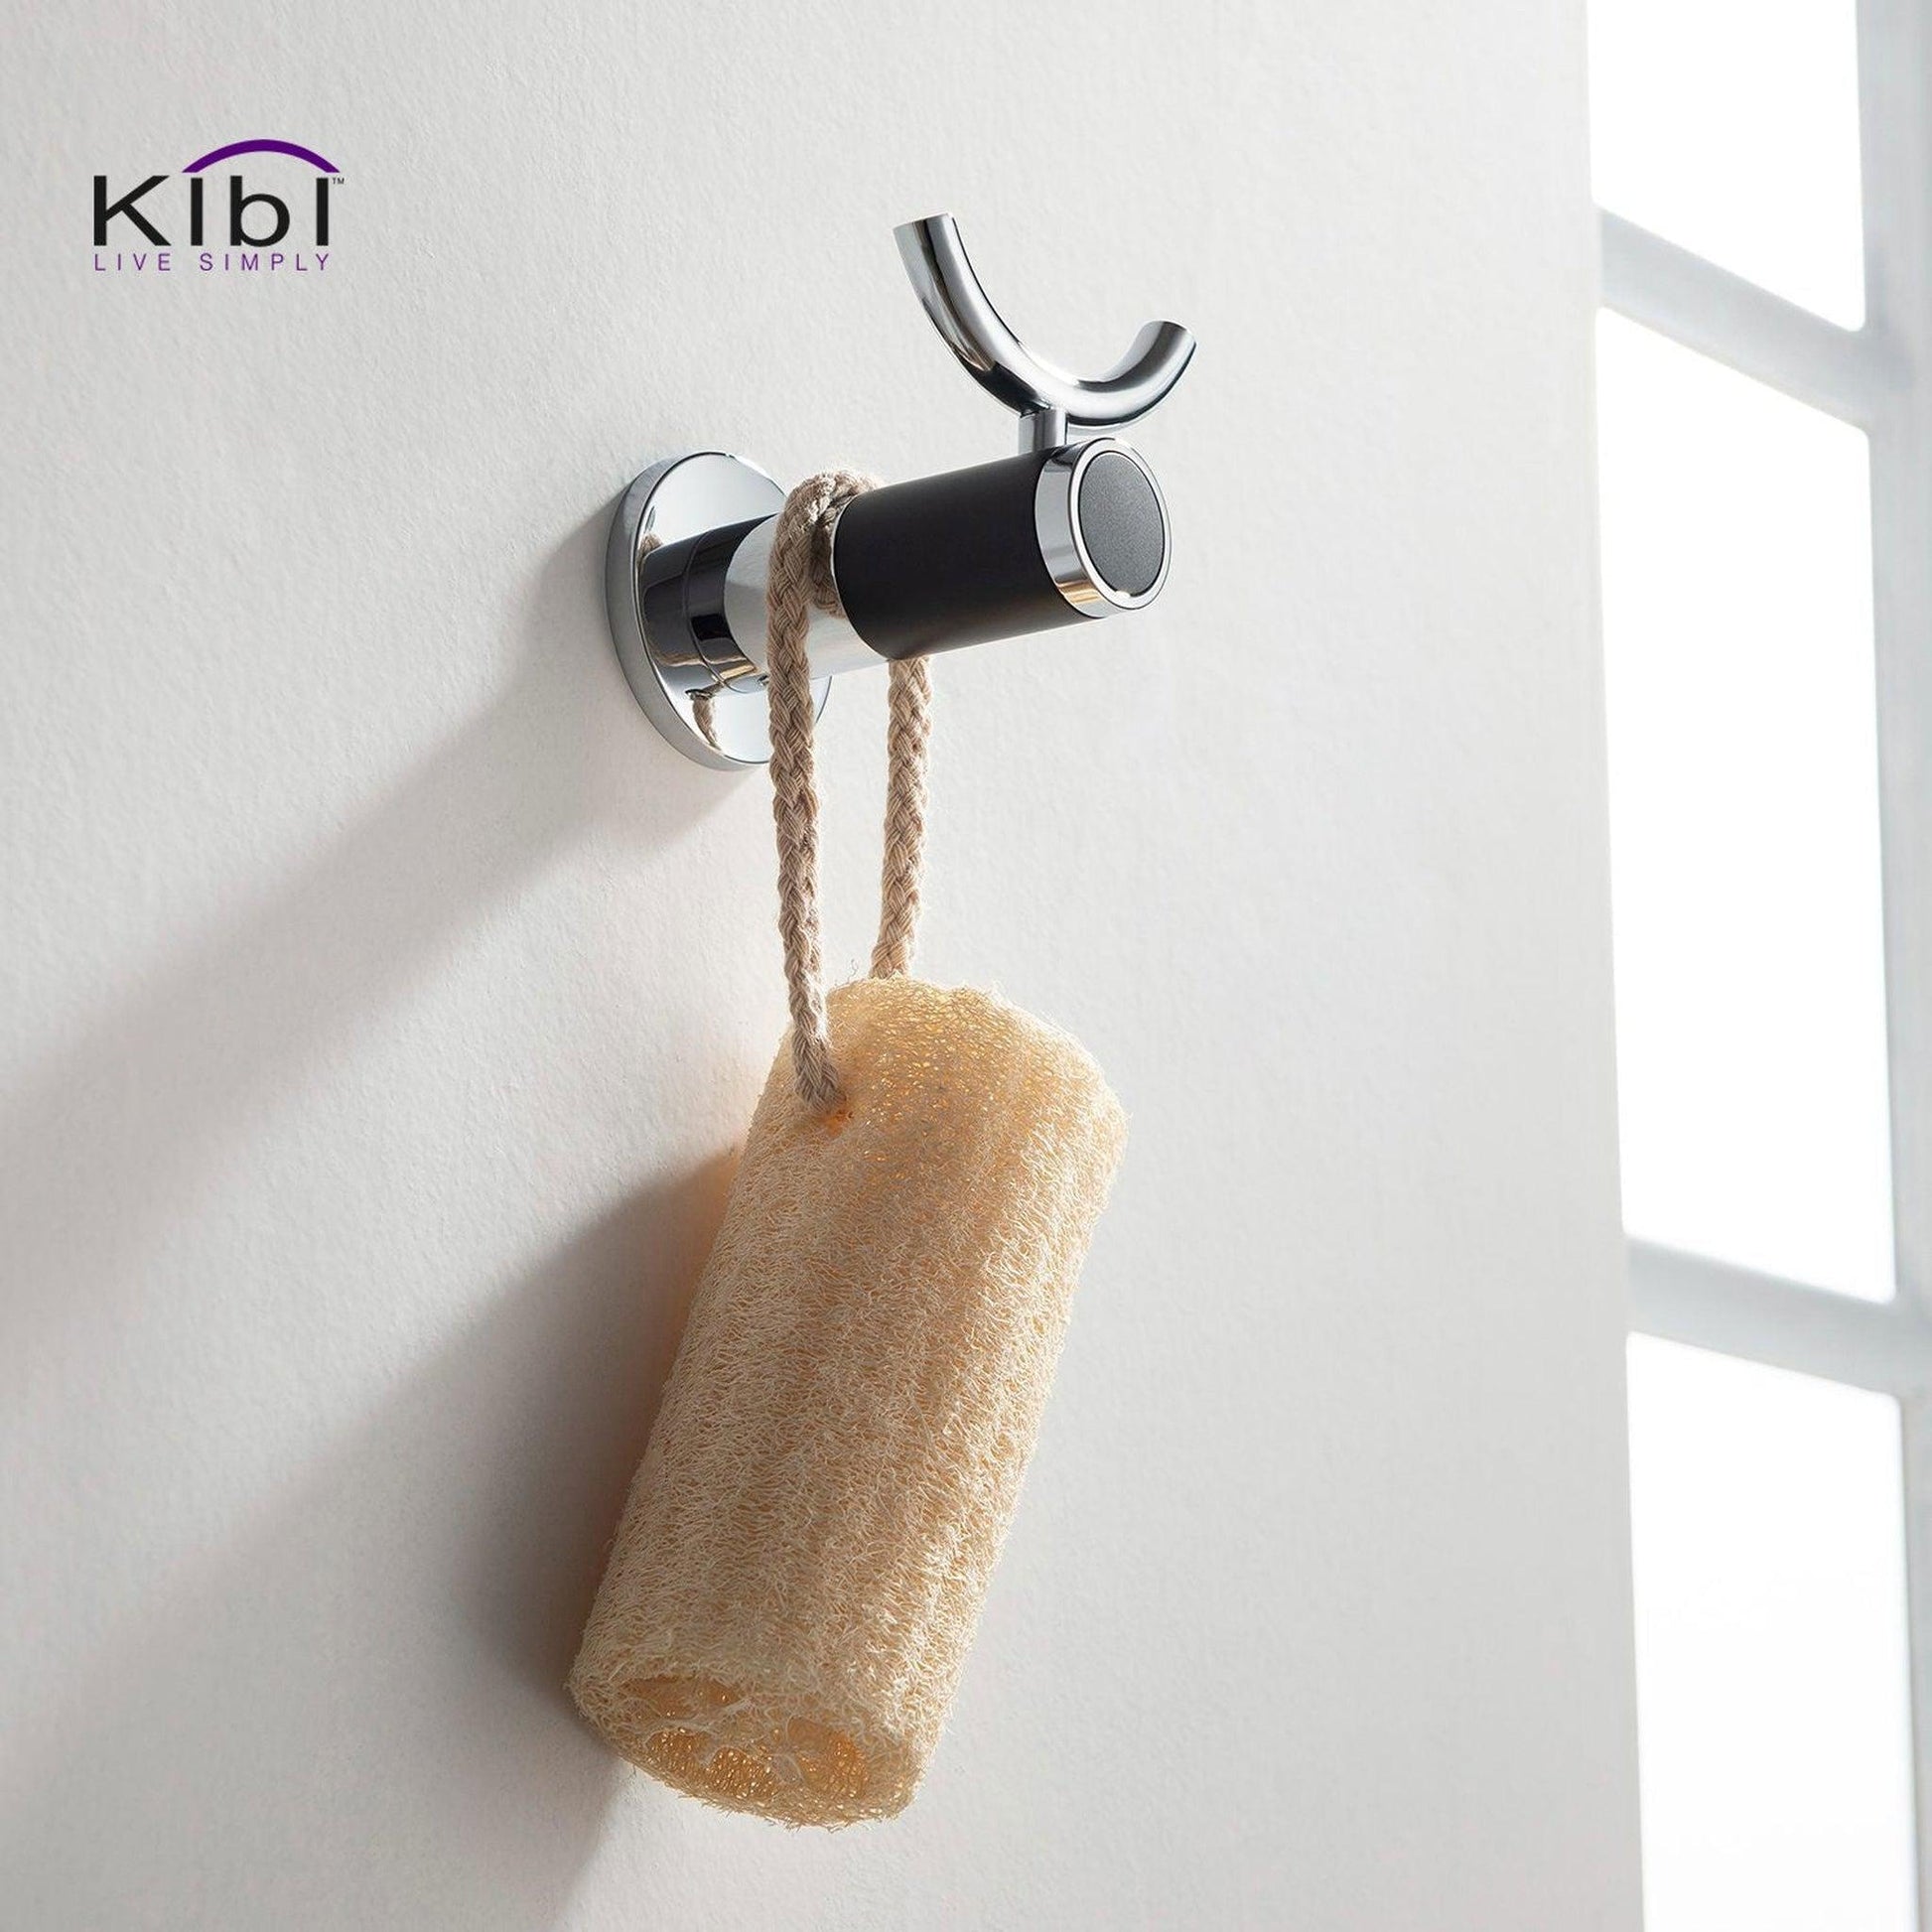 KIBI Abaco Bathroom Robe Hook in Chrome Black Finish